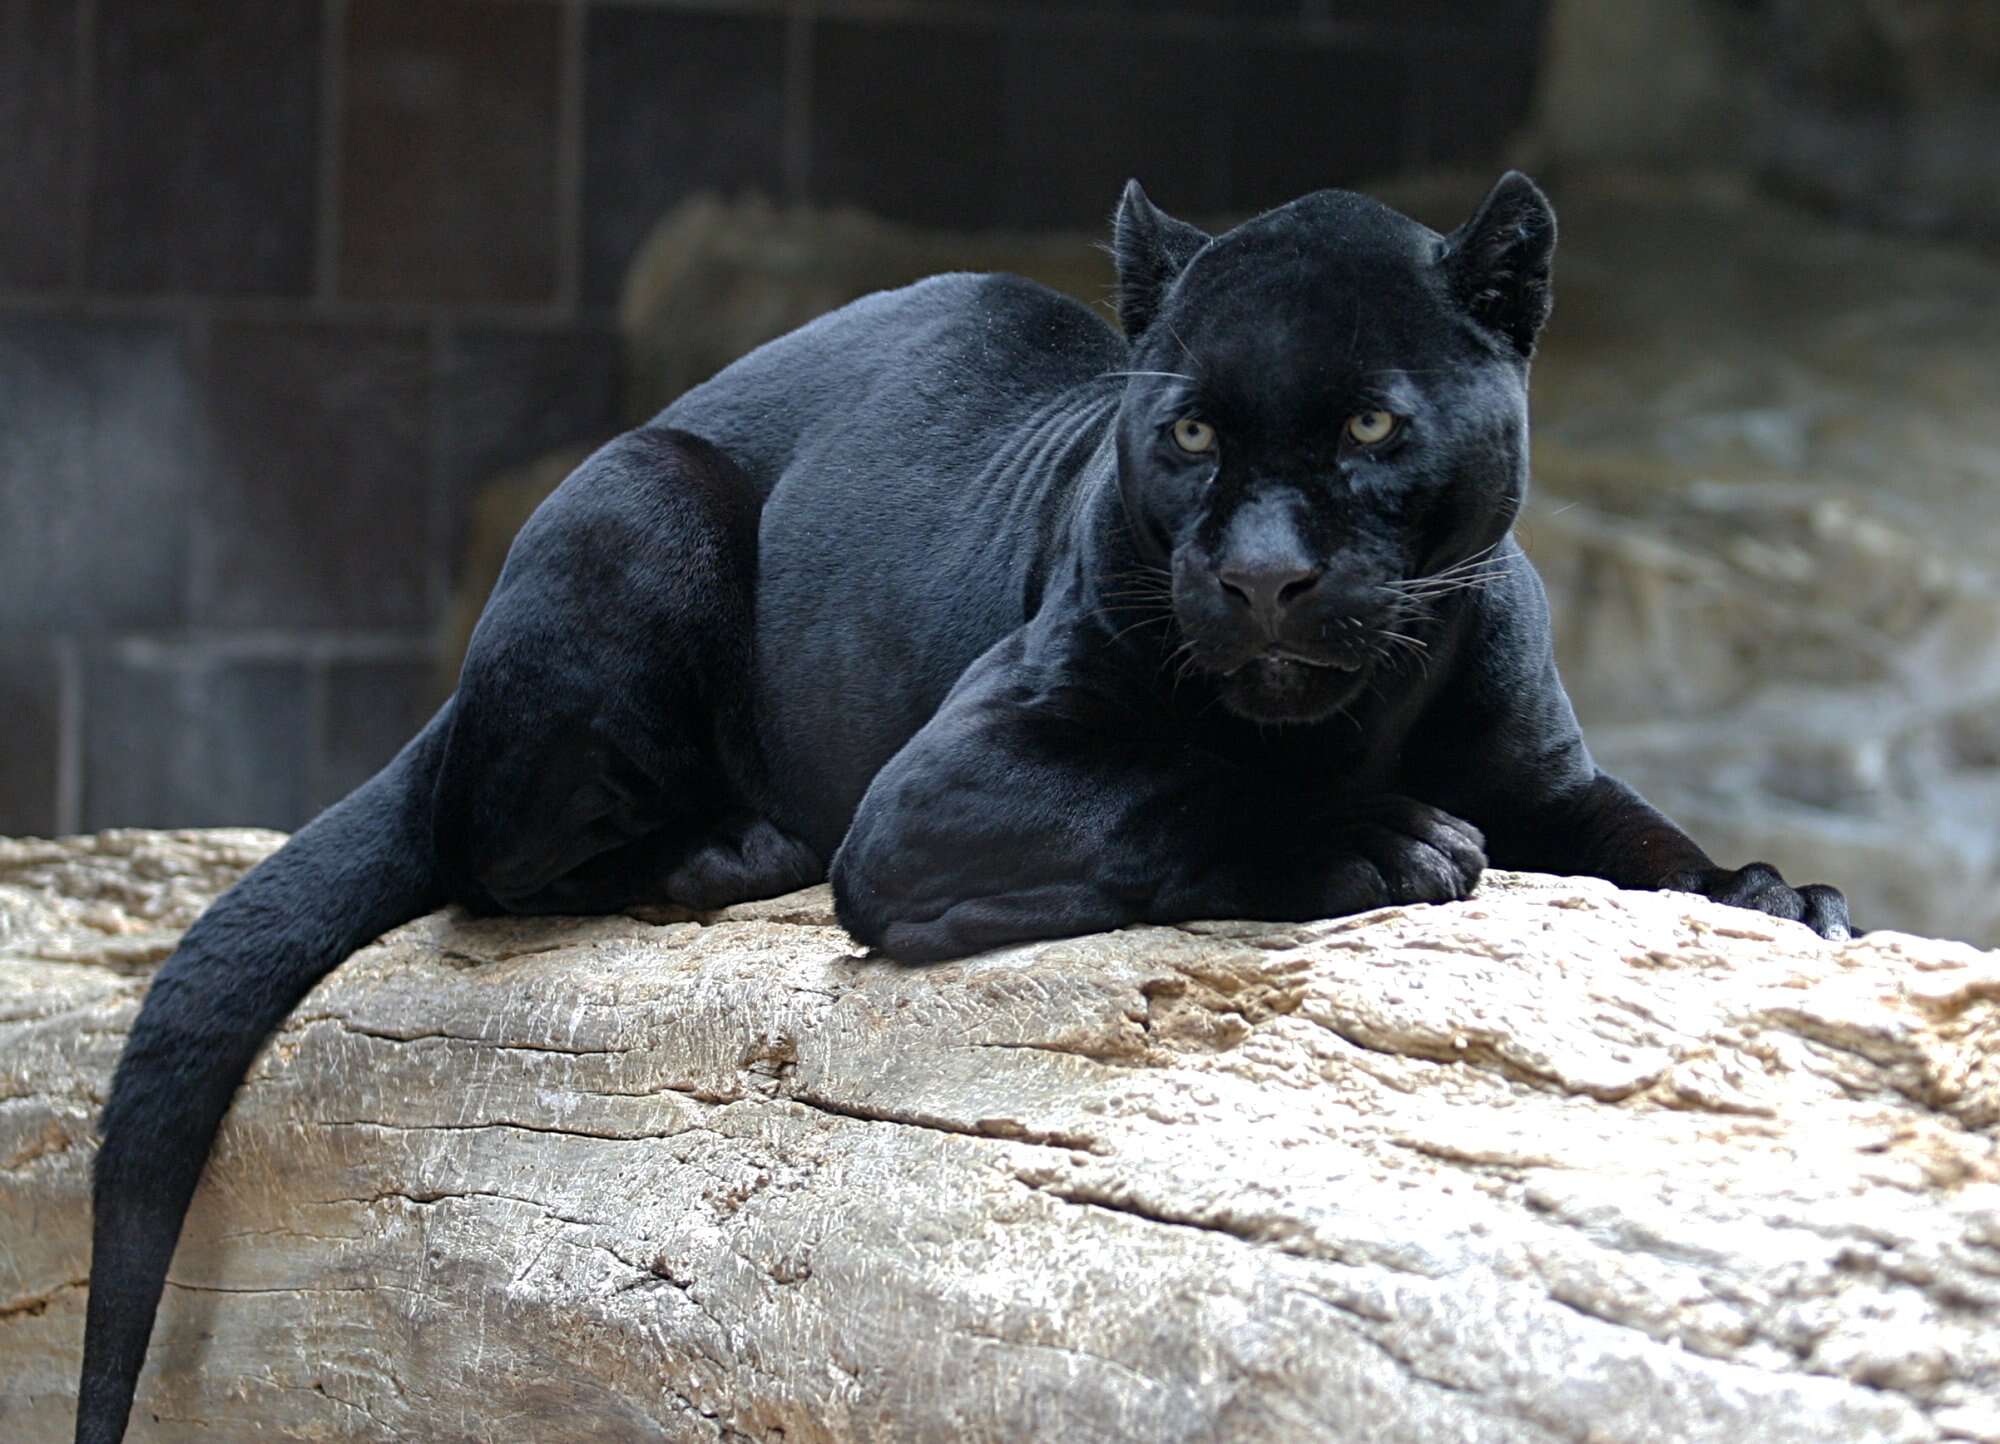 Image of Jaguar